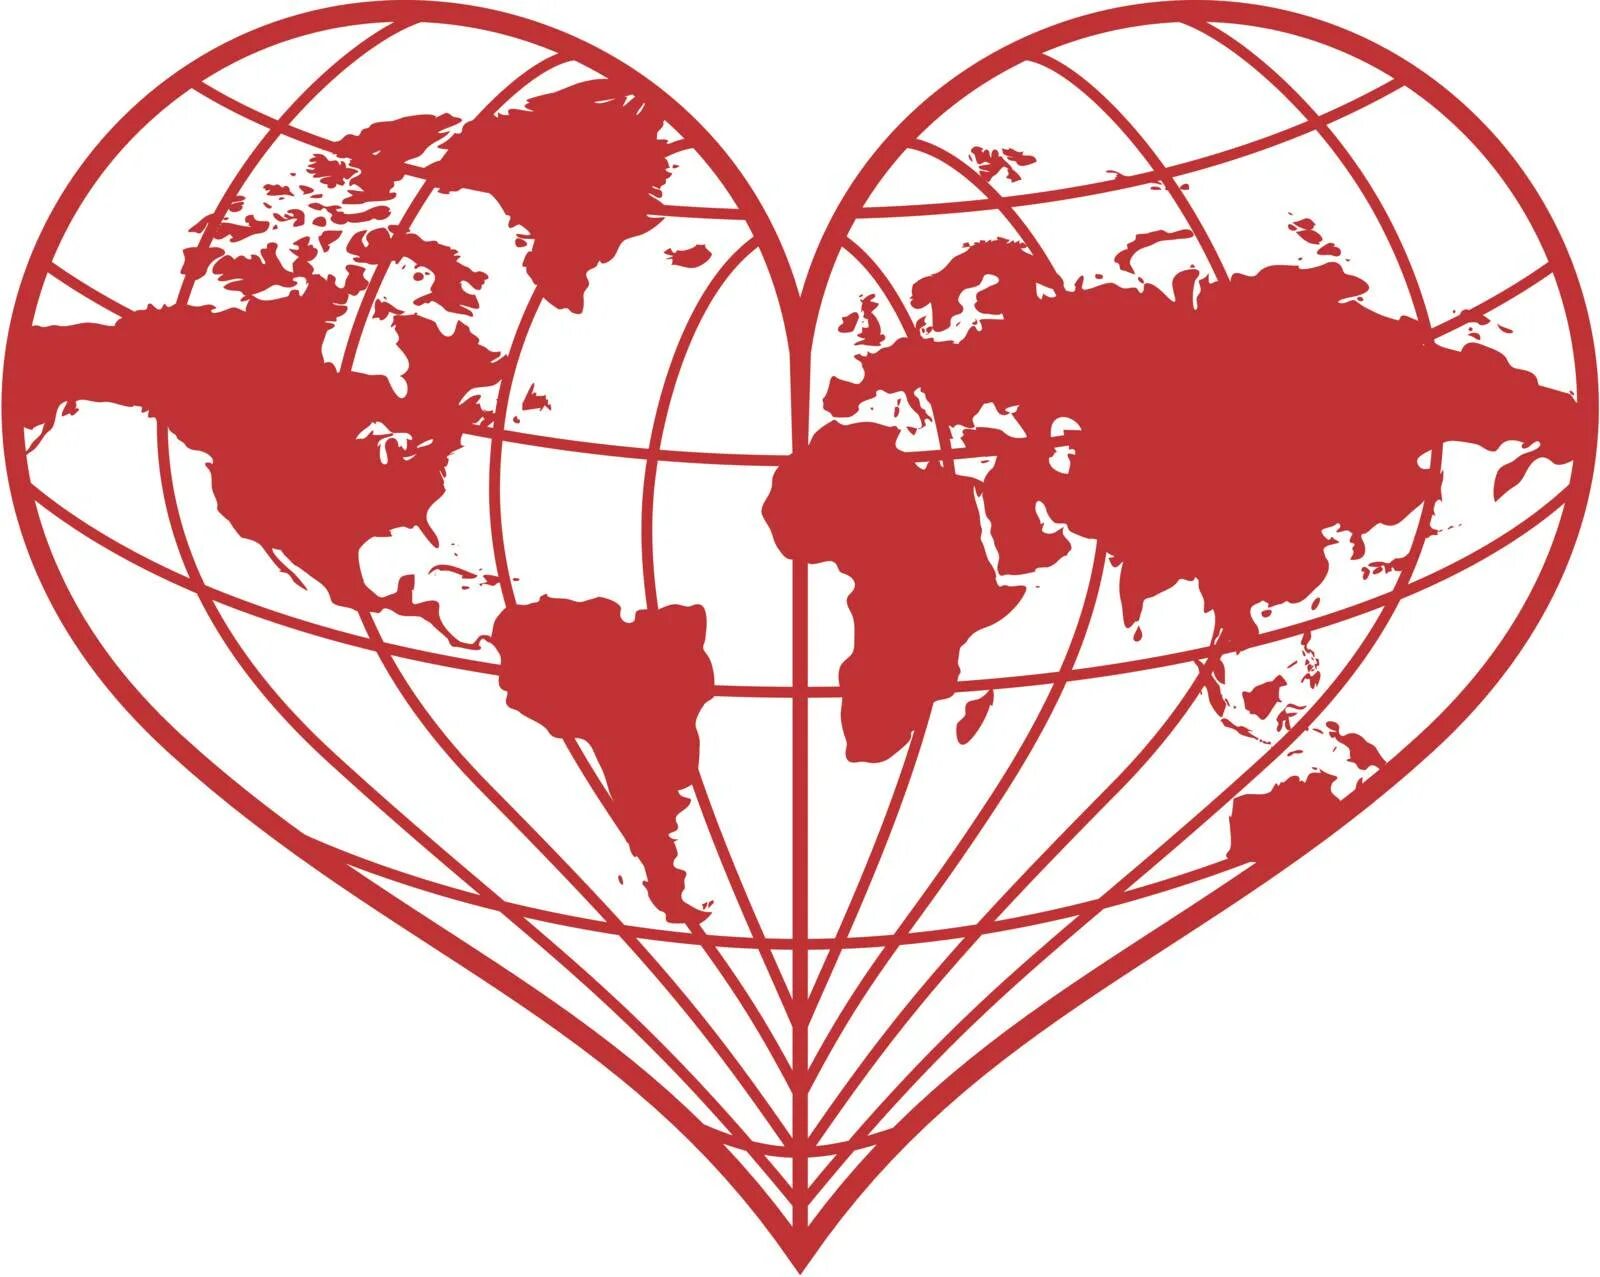 The world is heart. Планета сердце. Континенты в виде сердца. Глобус в виде сердца. Сердце земной шар.